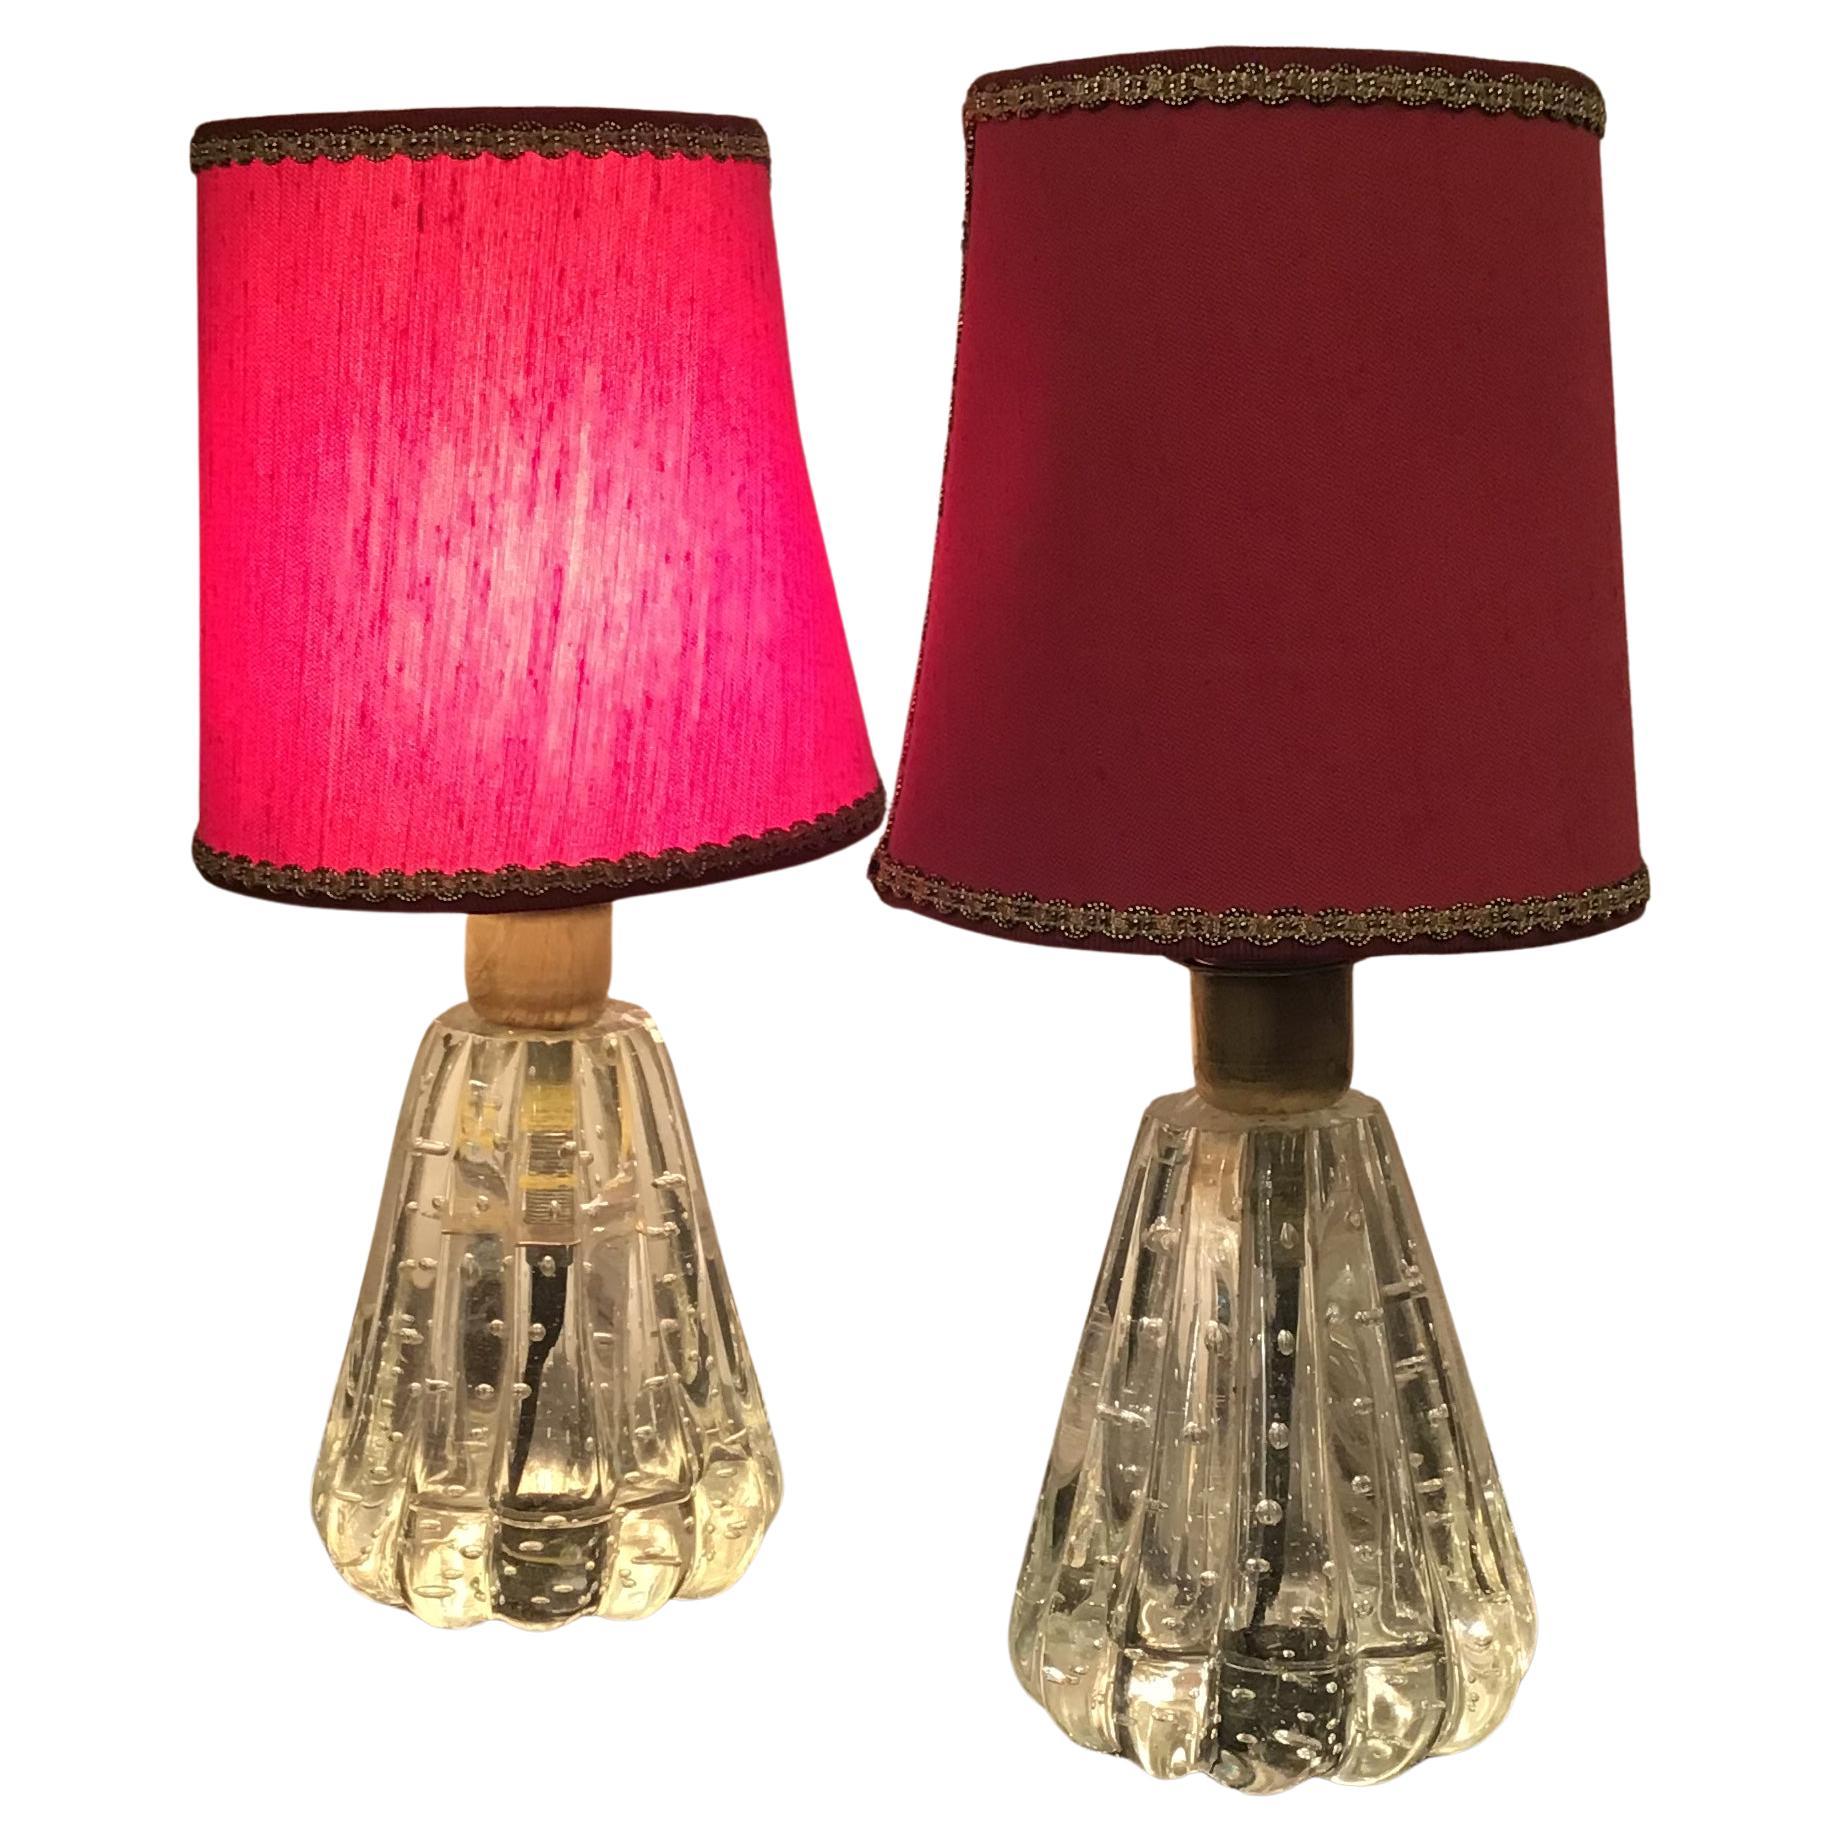 Barovier & Toso - Lampes de bureau en verre de Murano avec abat-jour en tissu et laiton - 1940 - Italie en vente